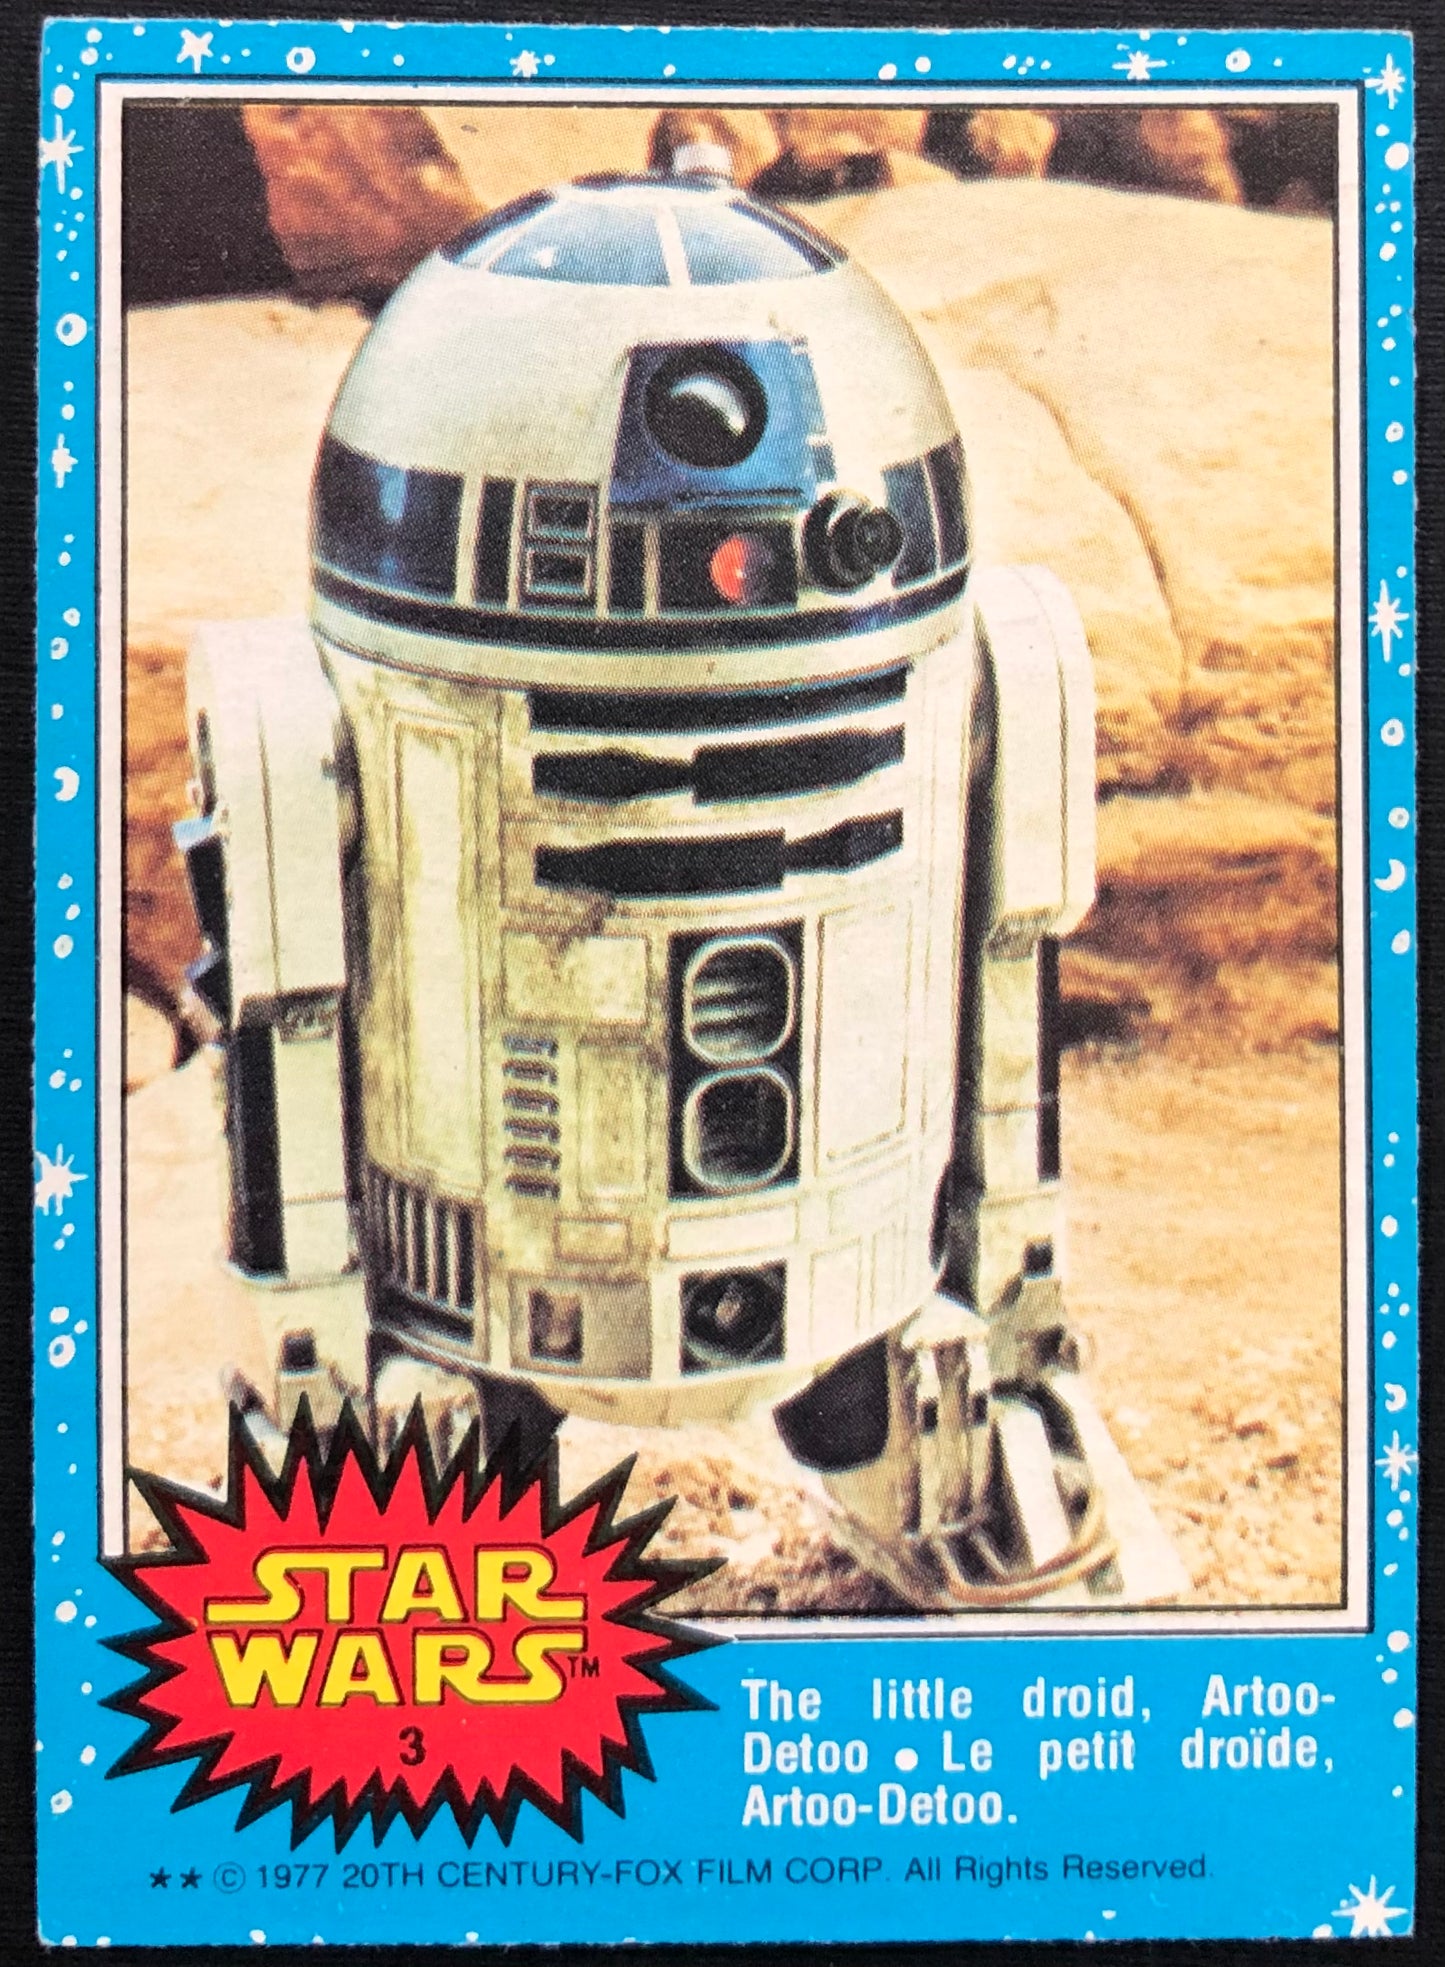 1977 OPC Star Wars raw cards